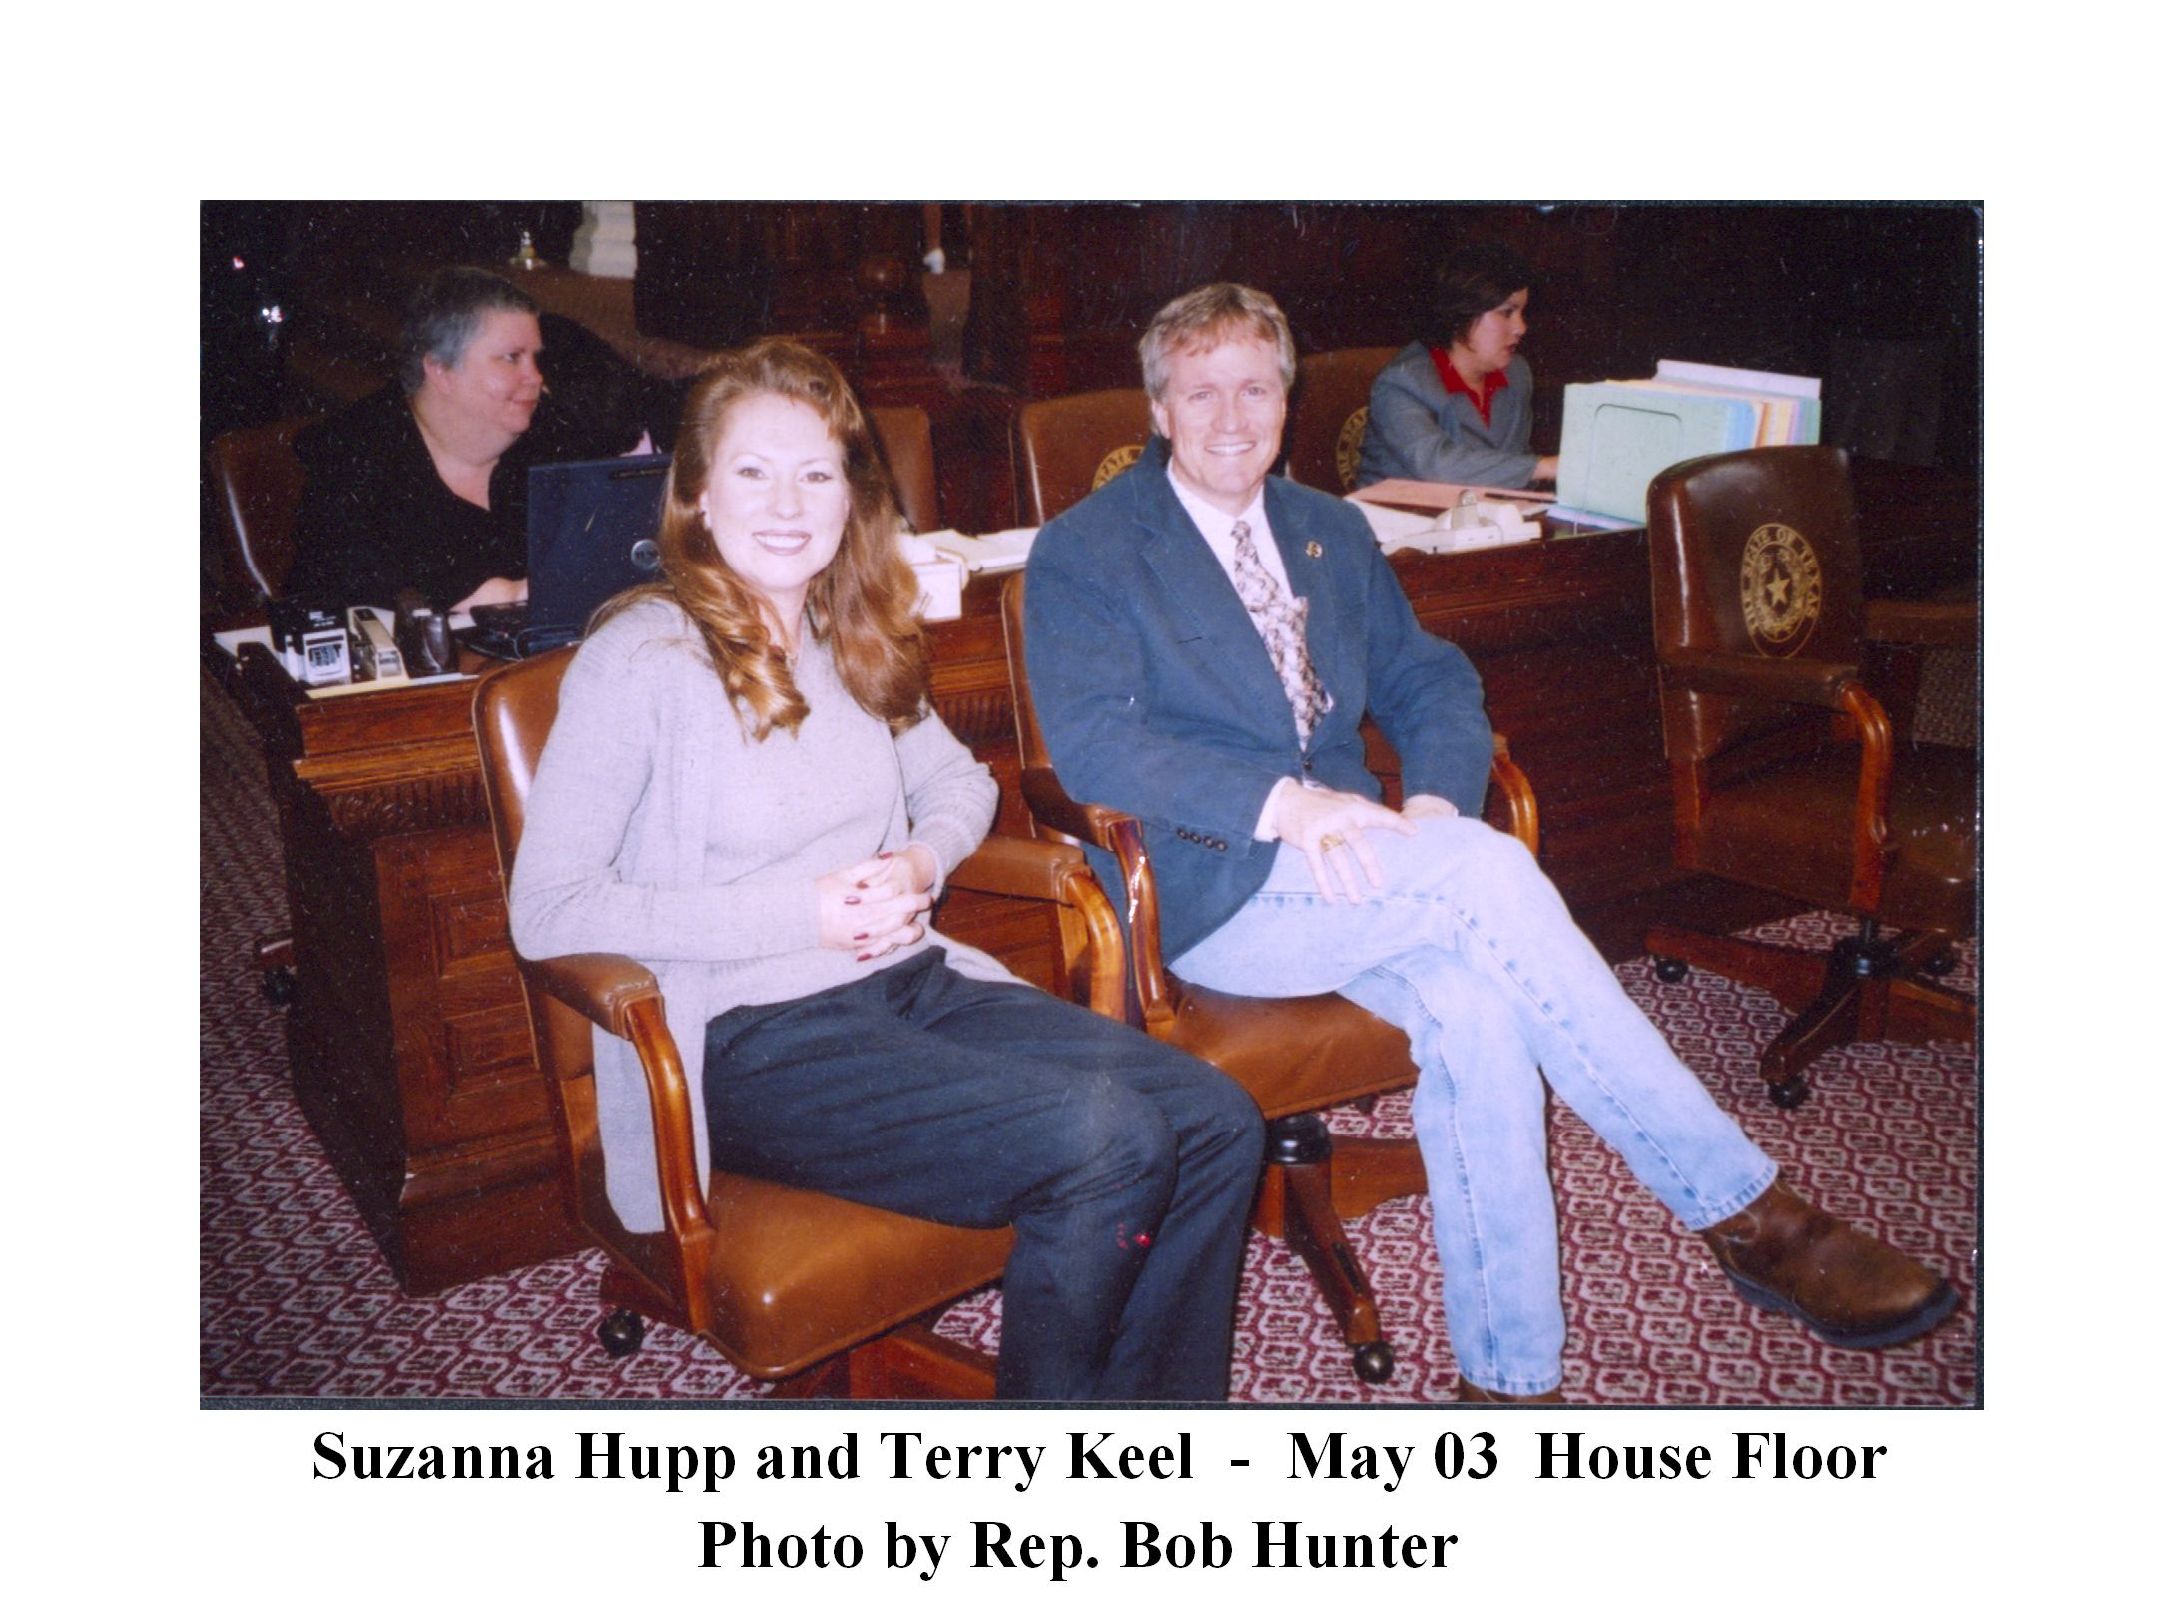 Suzanna Hupp and Terry Keel, Texas House of Representatives, 2003. Photo courtesy of Terry Keel